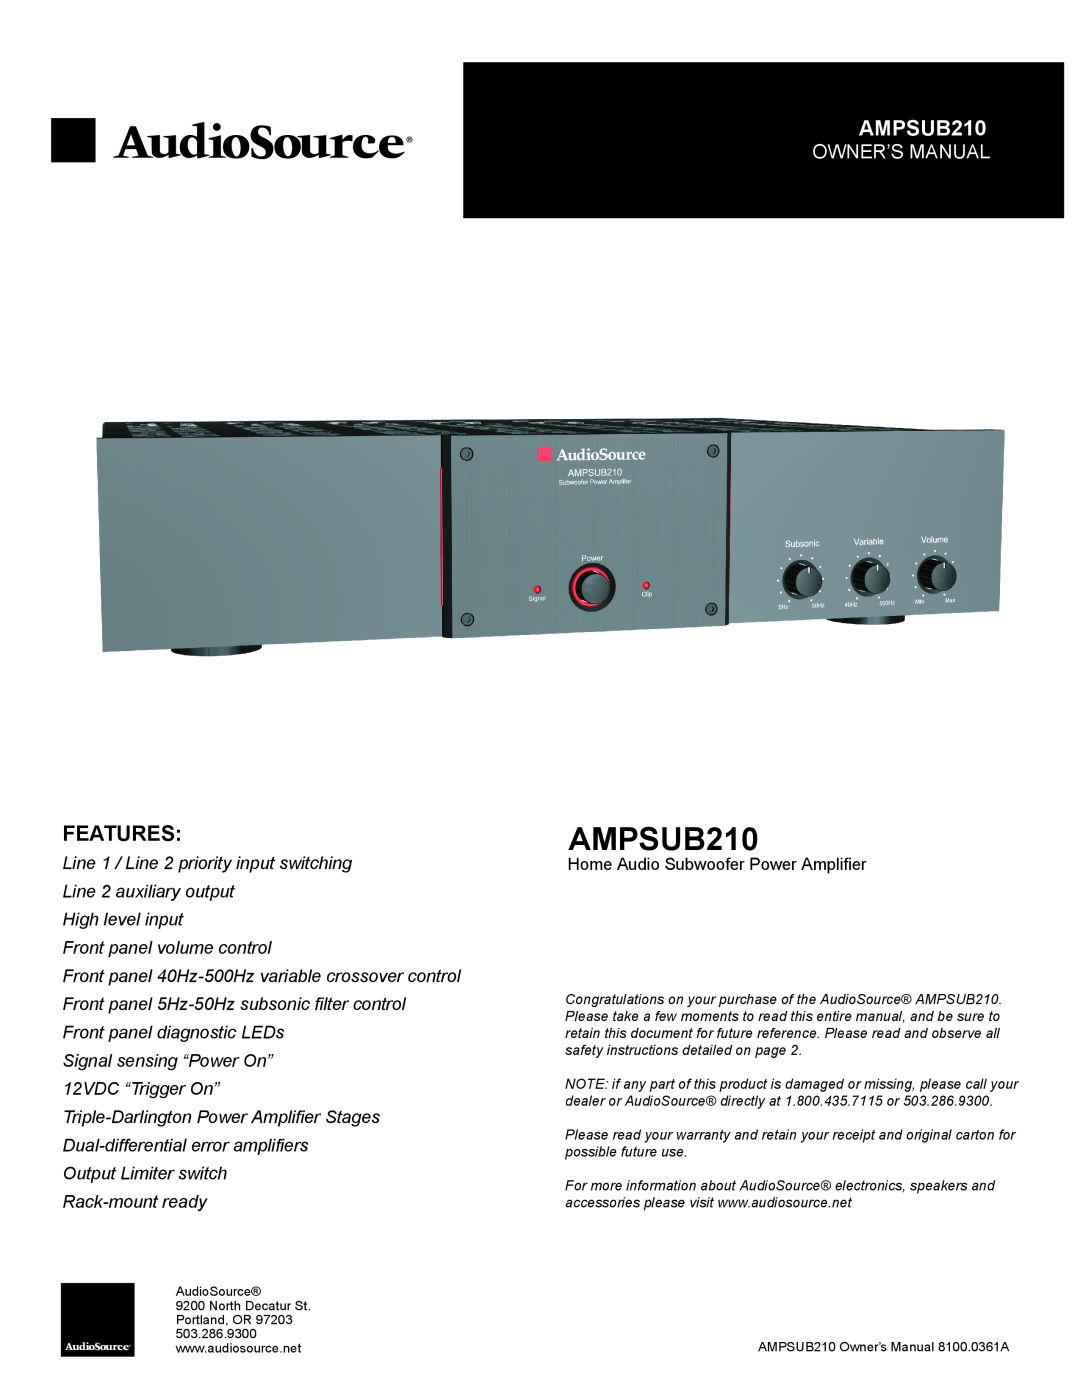 AudioSource AMPSUB210 owner manual Features, Owner’S Manual 